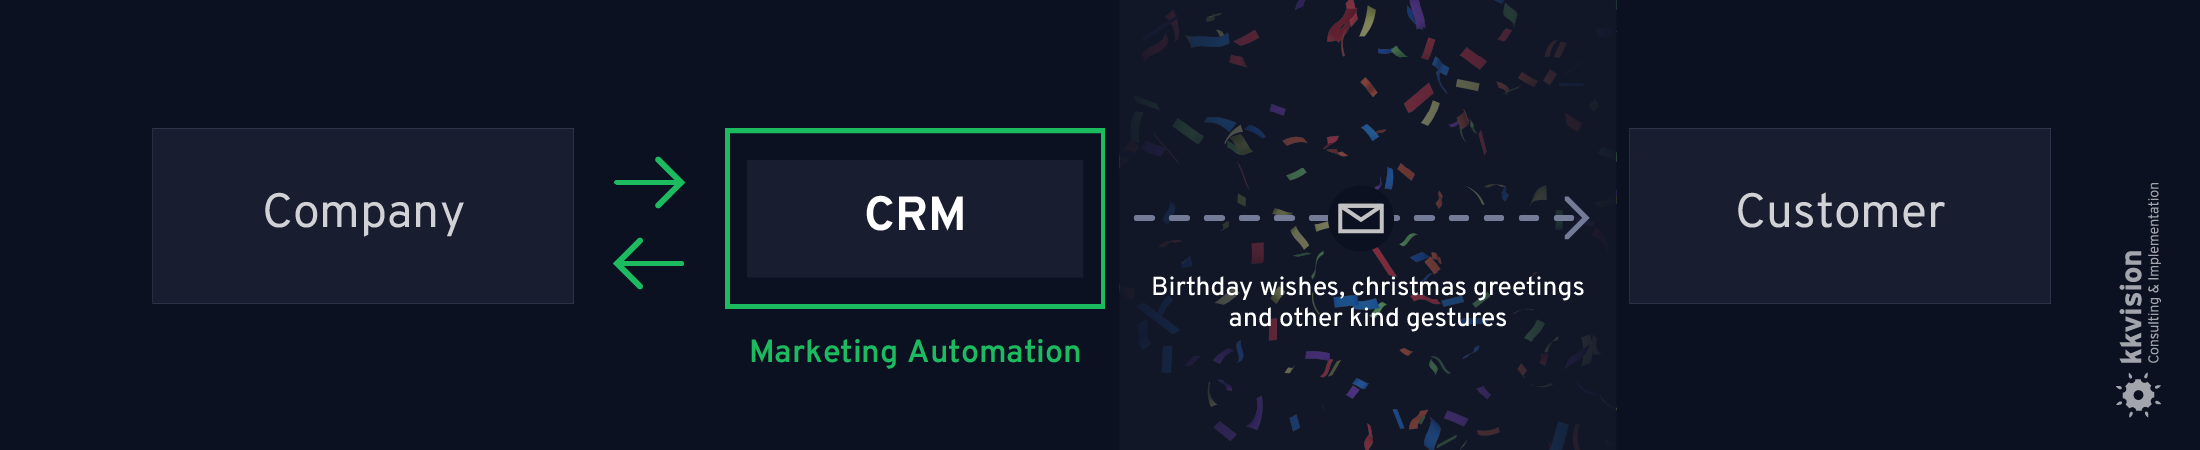 CRM & Marketing Automation_Celebrating events